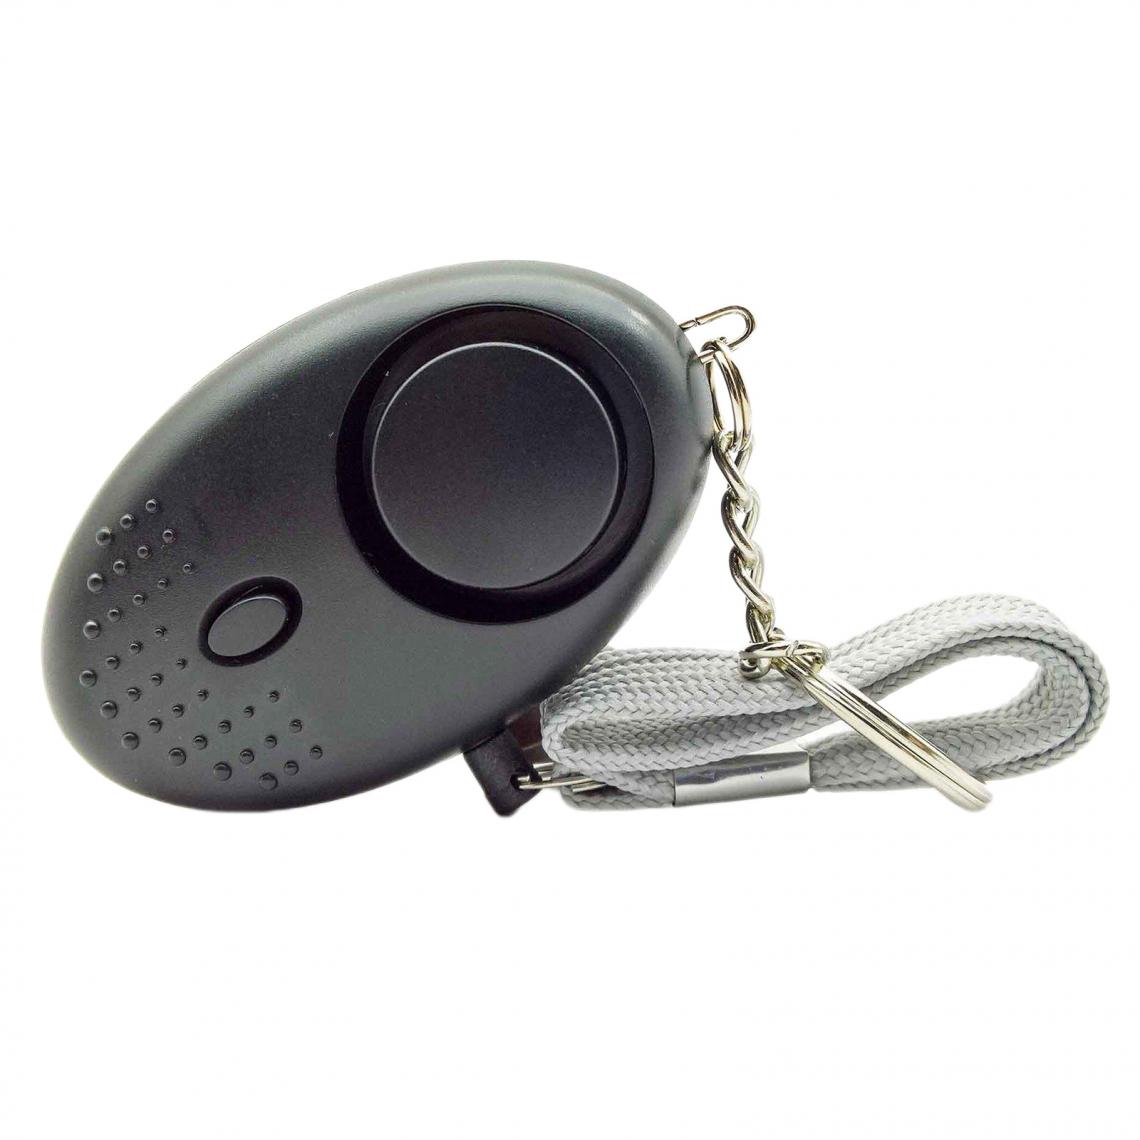 marque generique - Safe Sound Personal Alarm 130DB Security Alarm Keychain For Women Black - Alarme connectée